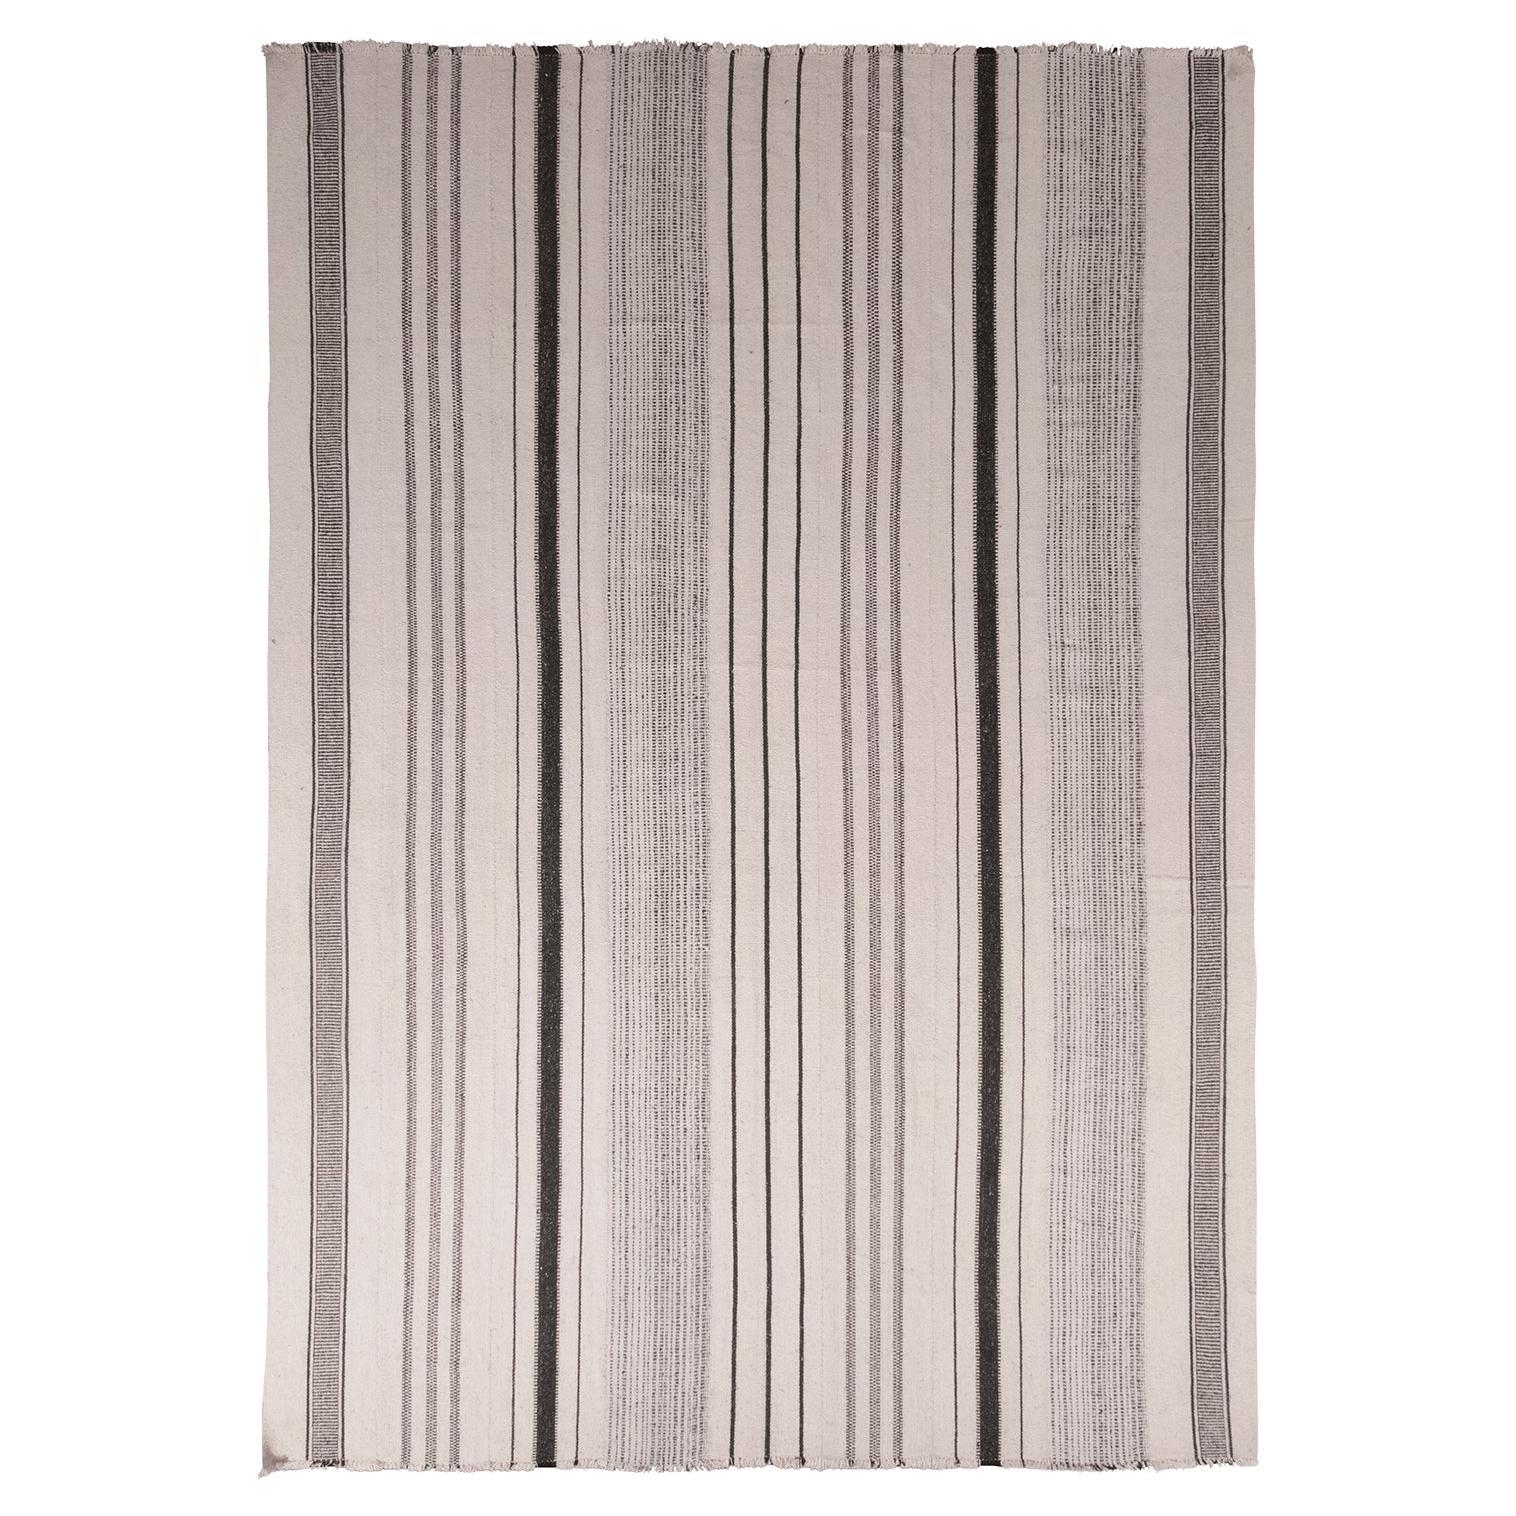 Vintage Turkish Kilim Rug in Black & White Striped Pattern by Rug & Kilim For Sale